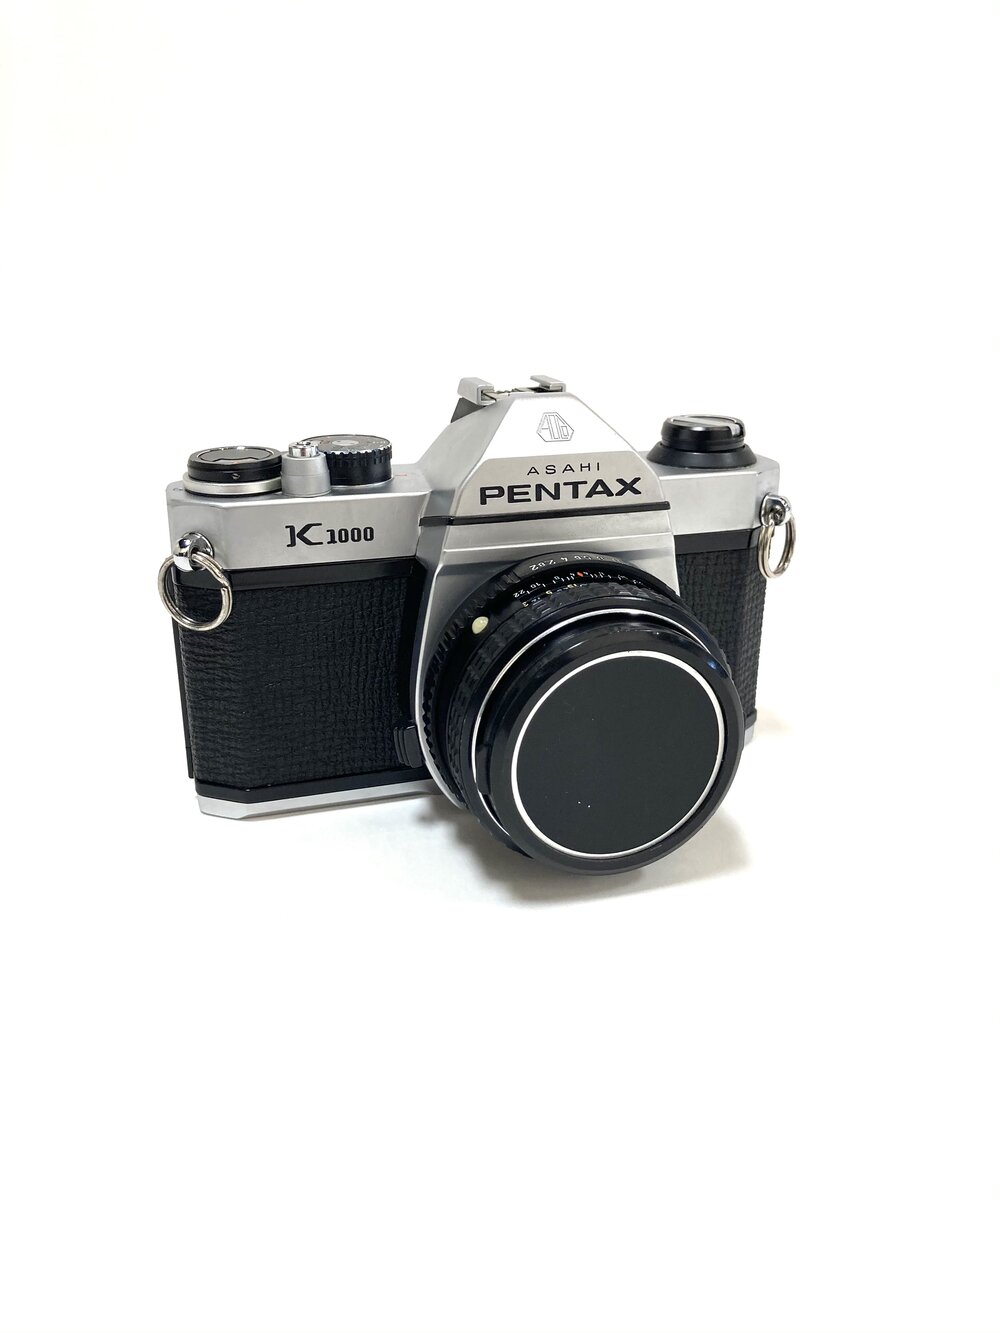 Pentax K1000 W Smc Pentax M 50mm F 2 Photographique